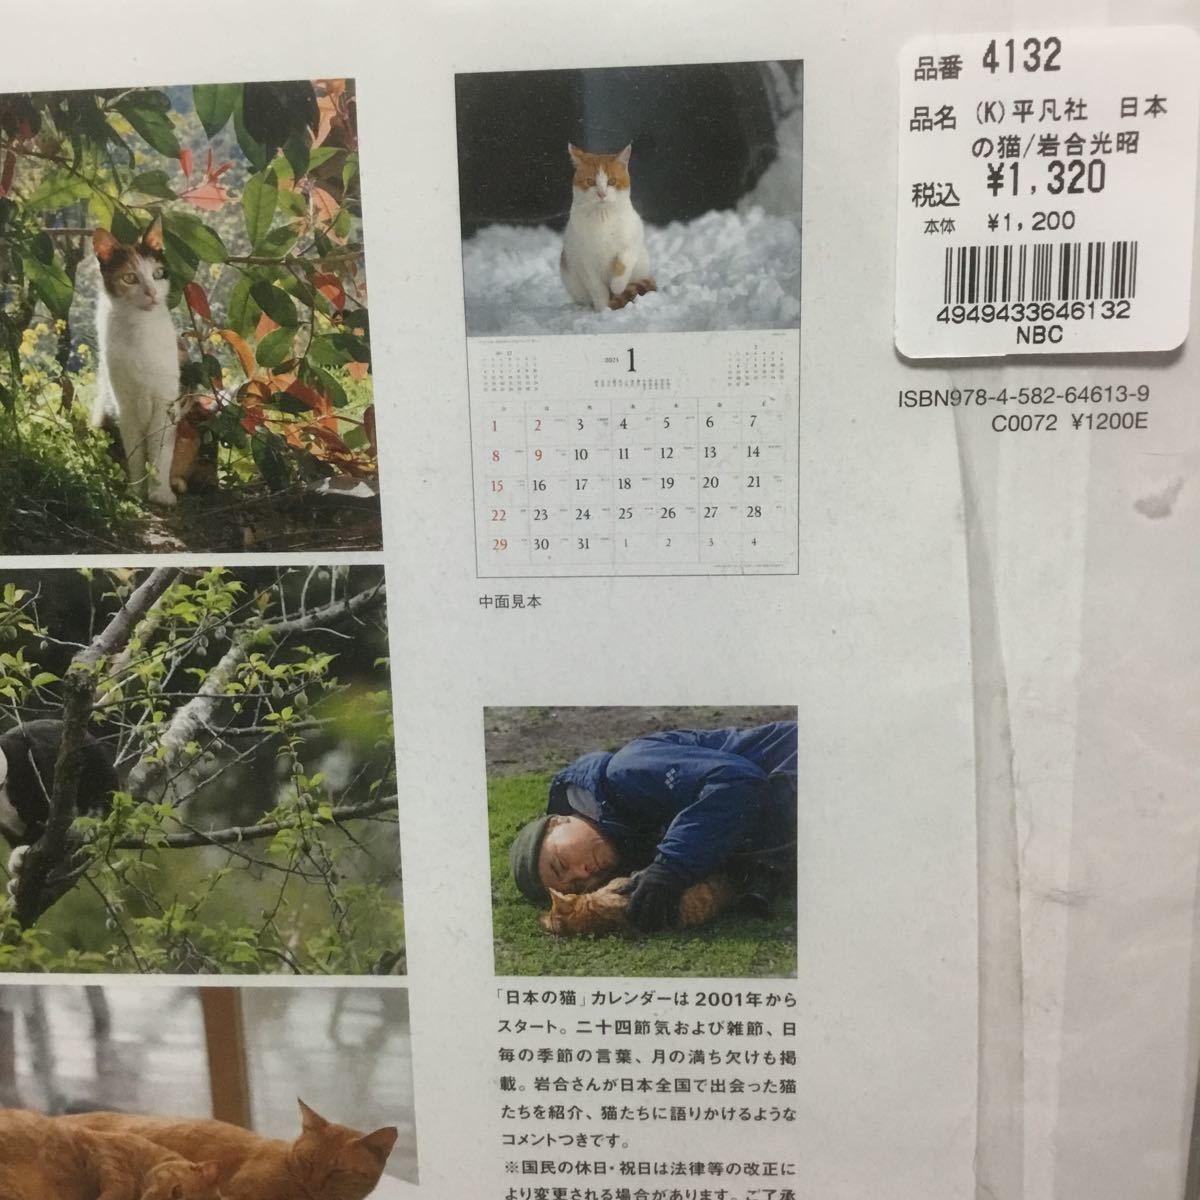  скала . свет . фотоальбом 2 шт. &2023 год календарь кошка кошка 